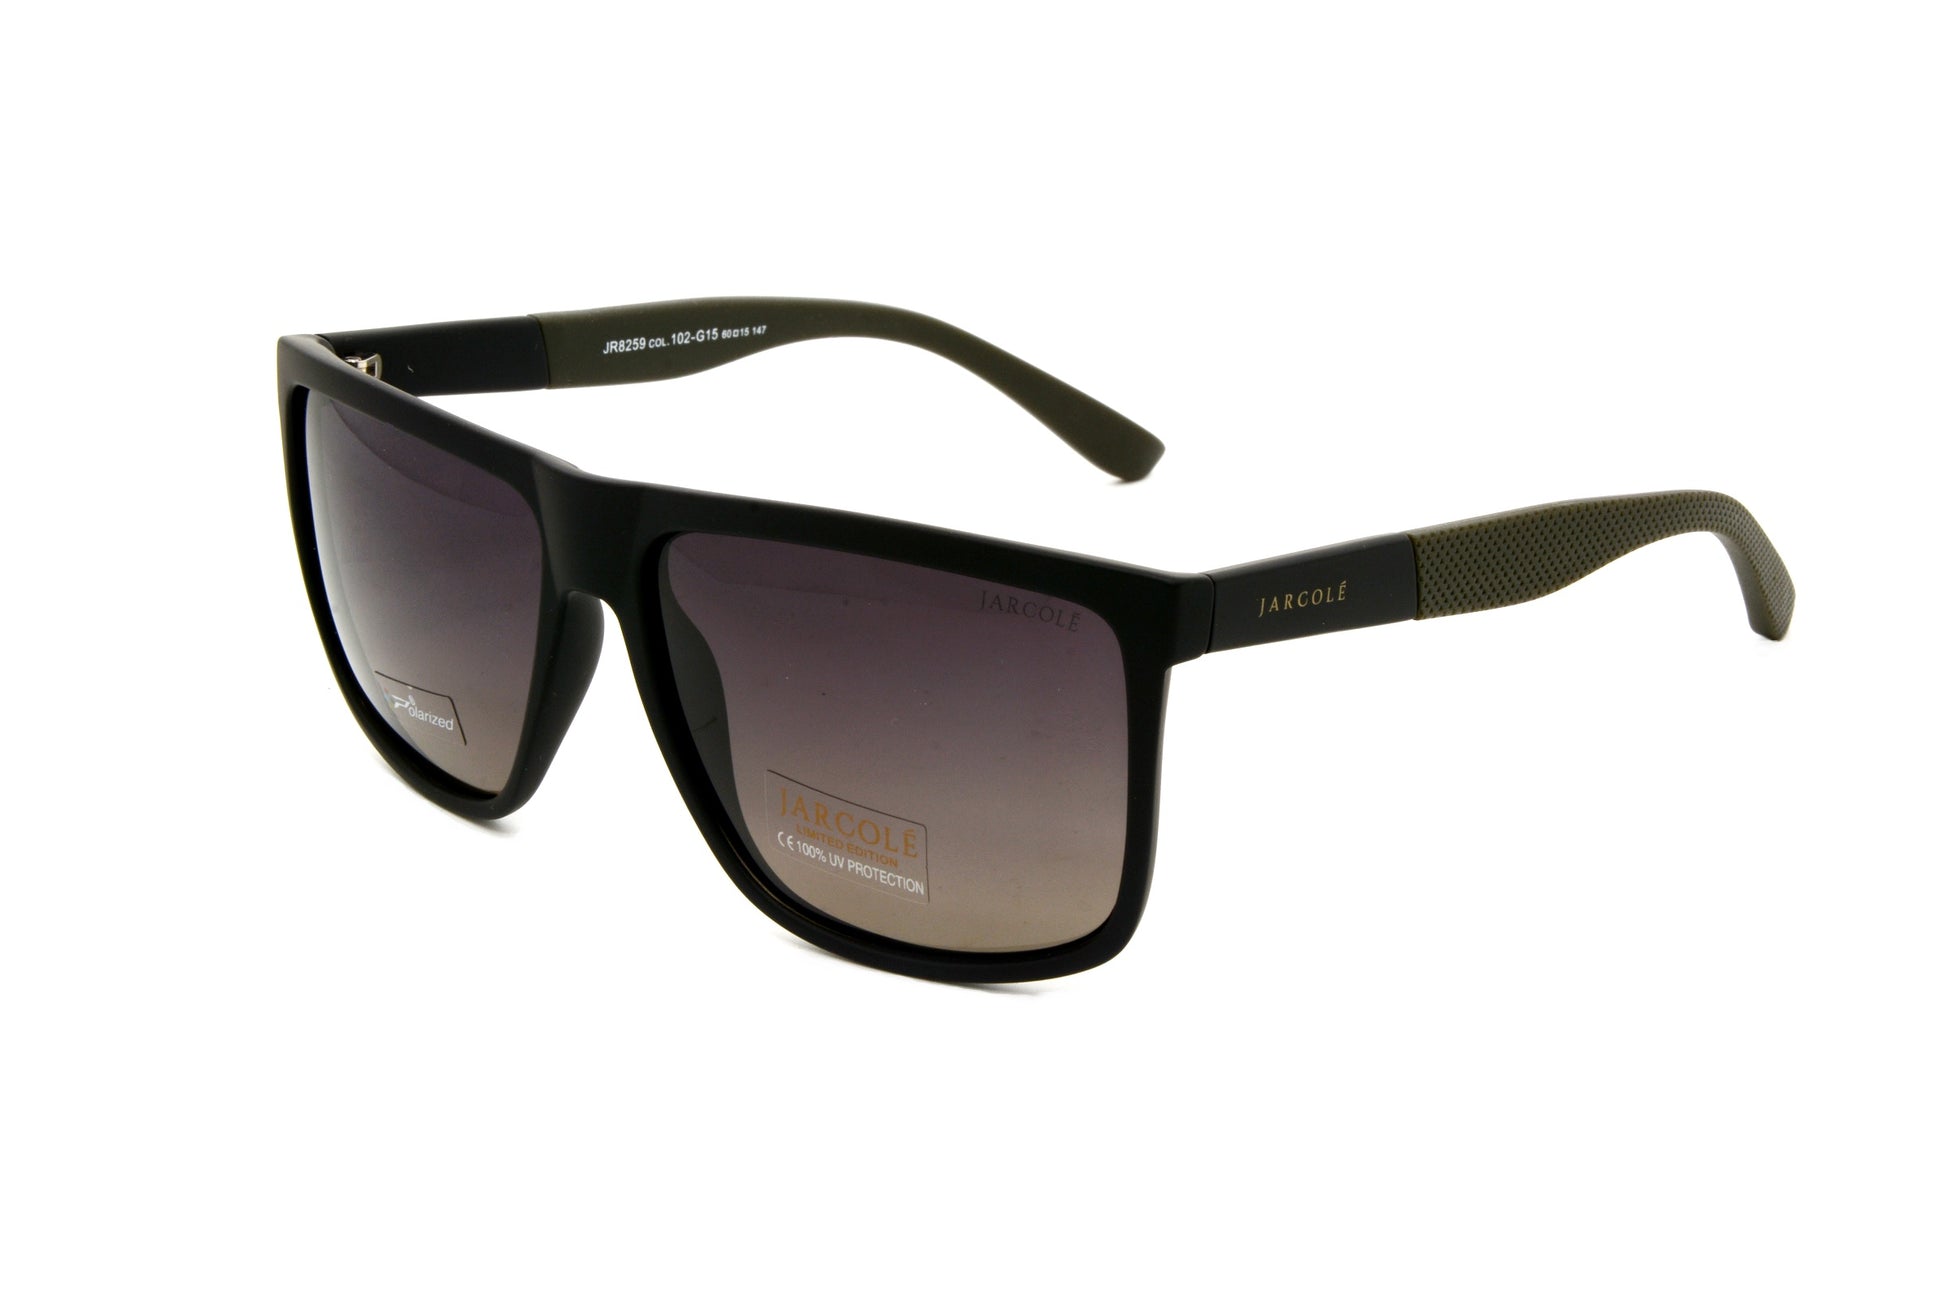 Jarcole sunglasses JR8259 102-G15